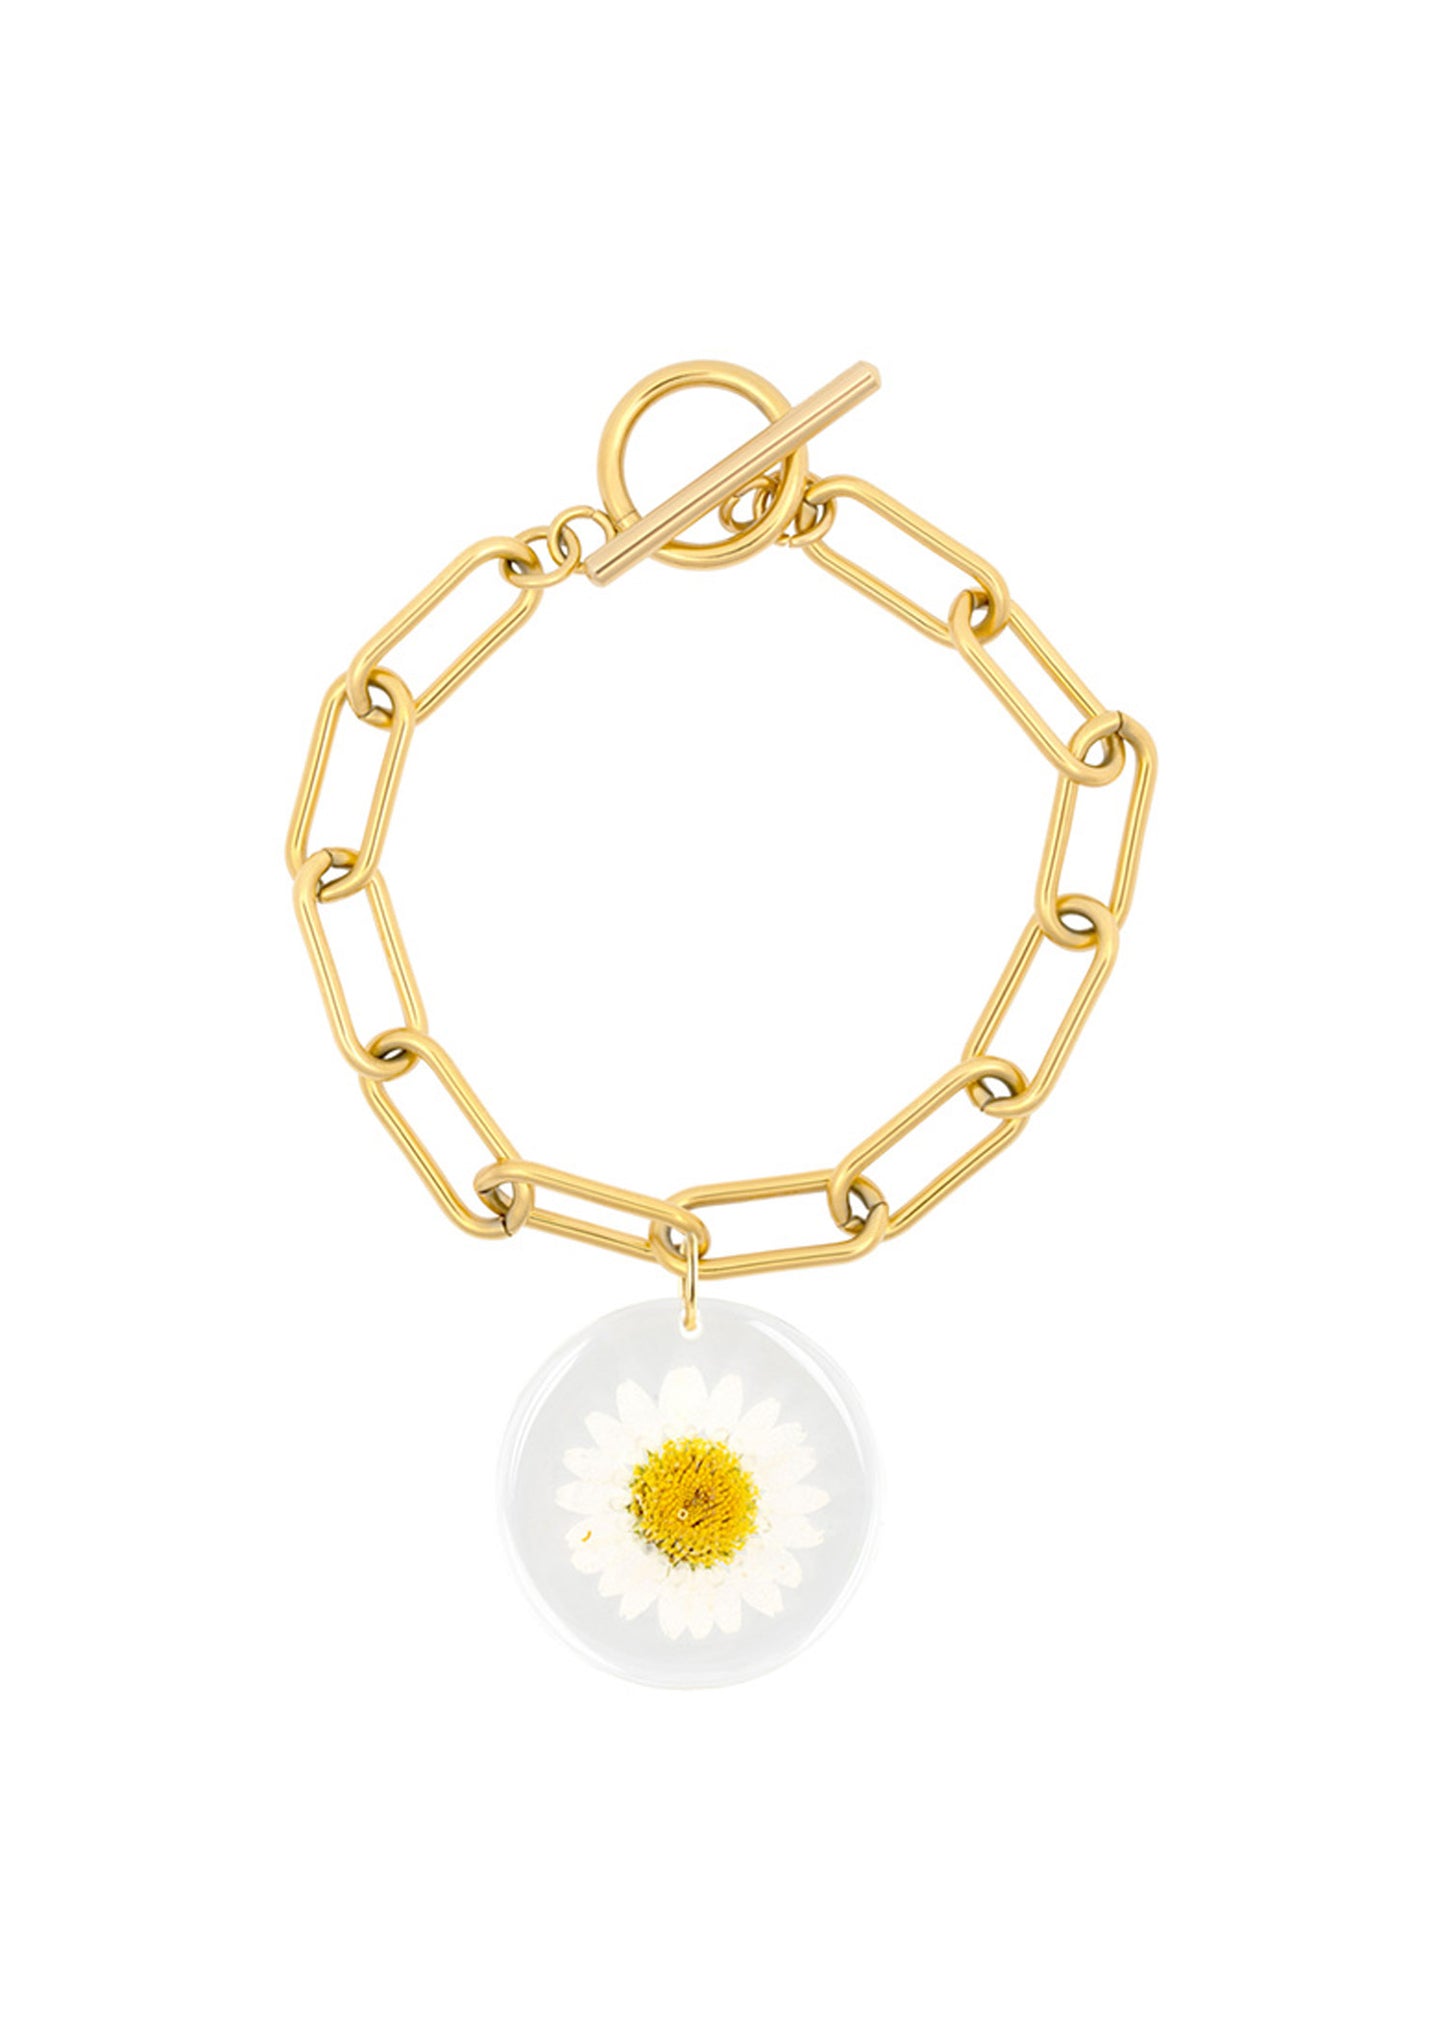 Daisy pendant on gold chain bracelet.